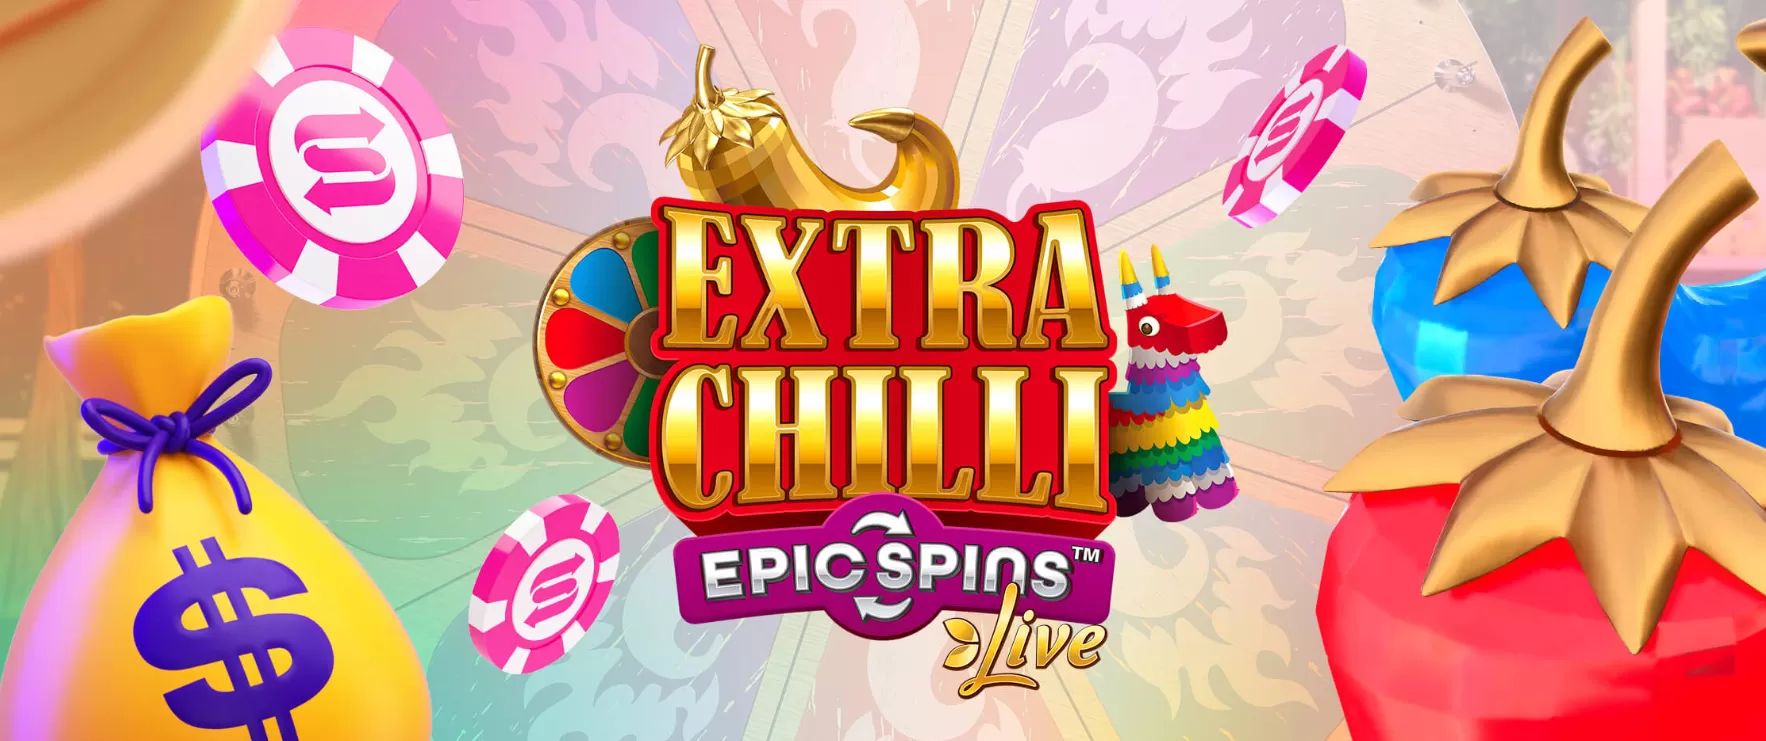 extra chilli epic spins logo